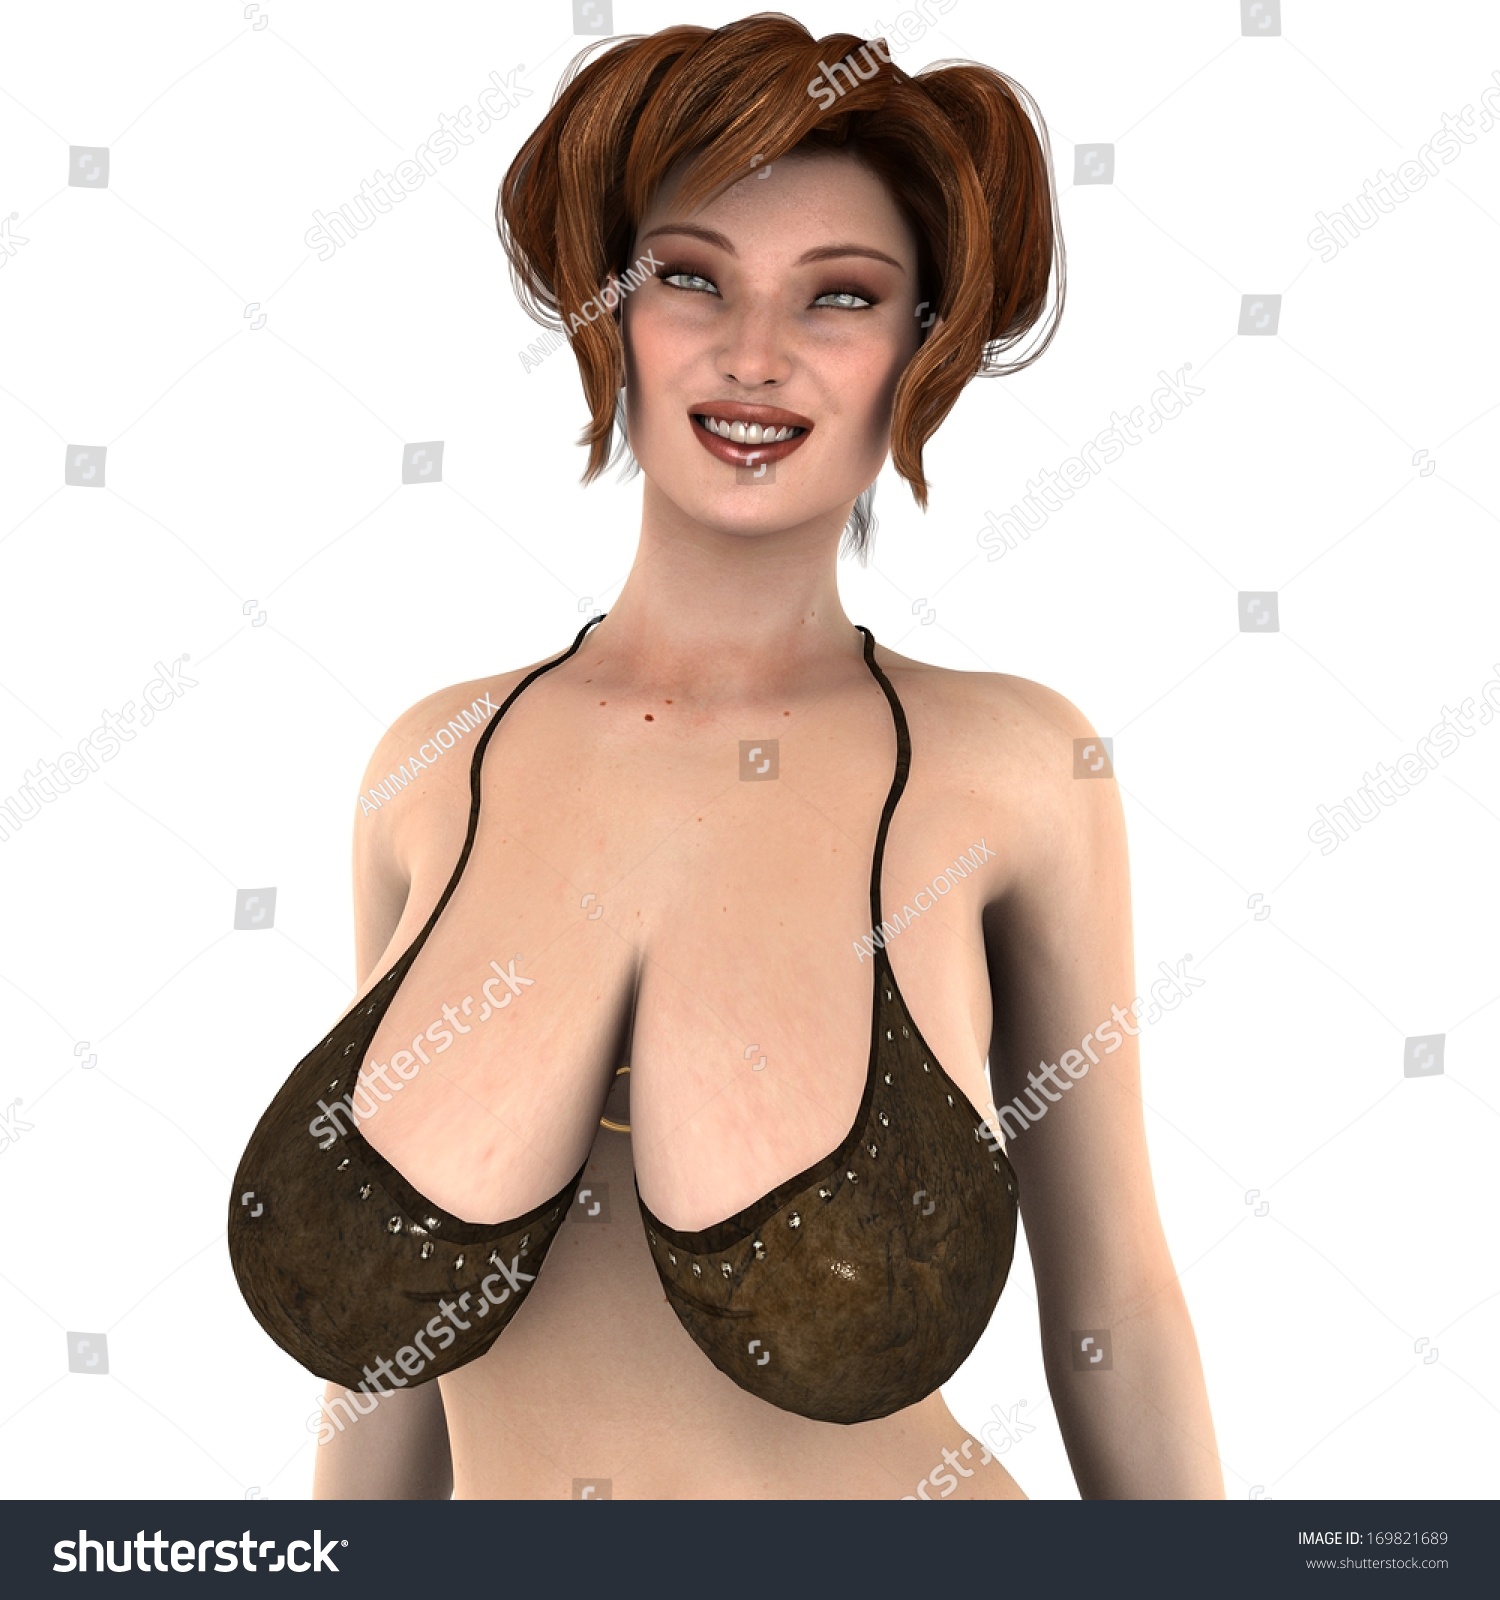 Big Breasted Women Pics